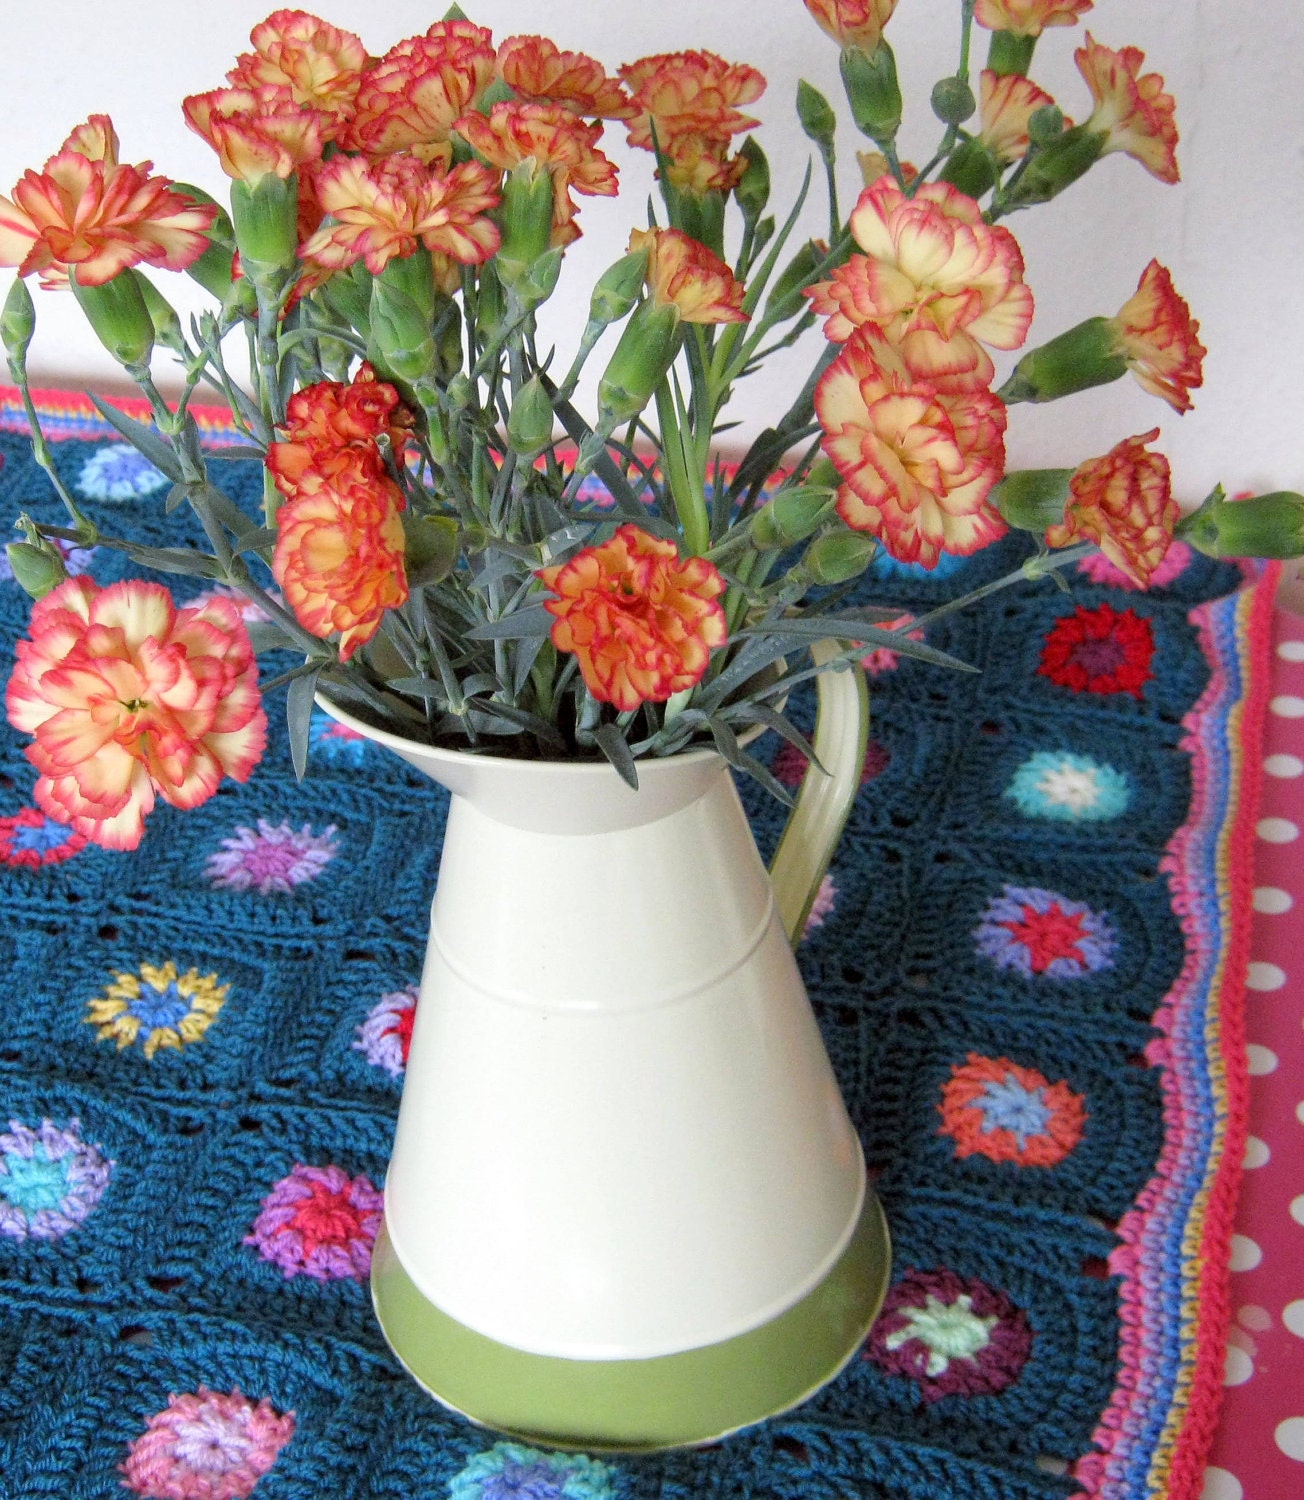 Retro Vintage Style Teal Flower Granny Square Crochet Blanket Afghan Sublime